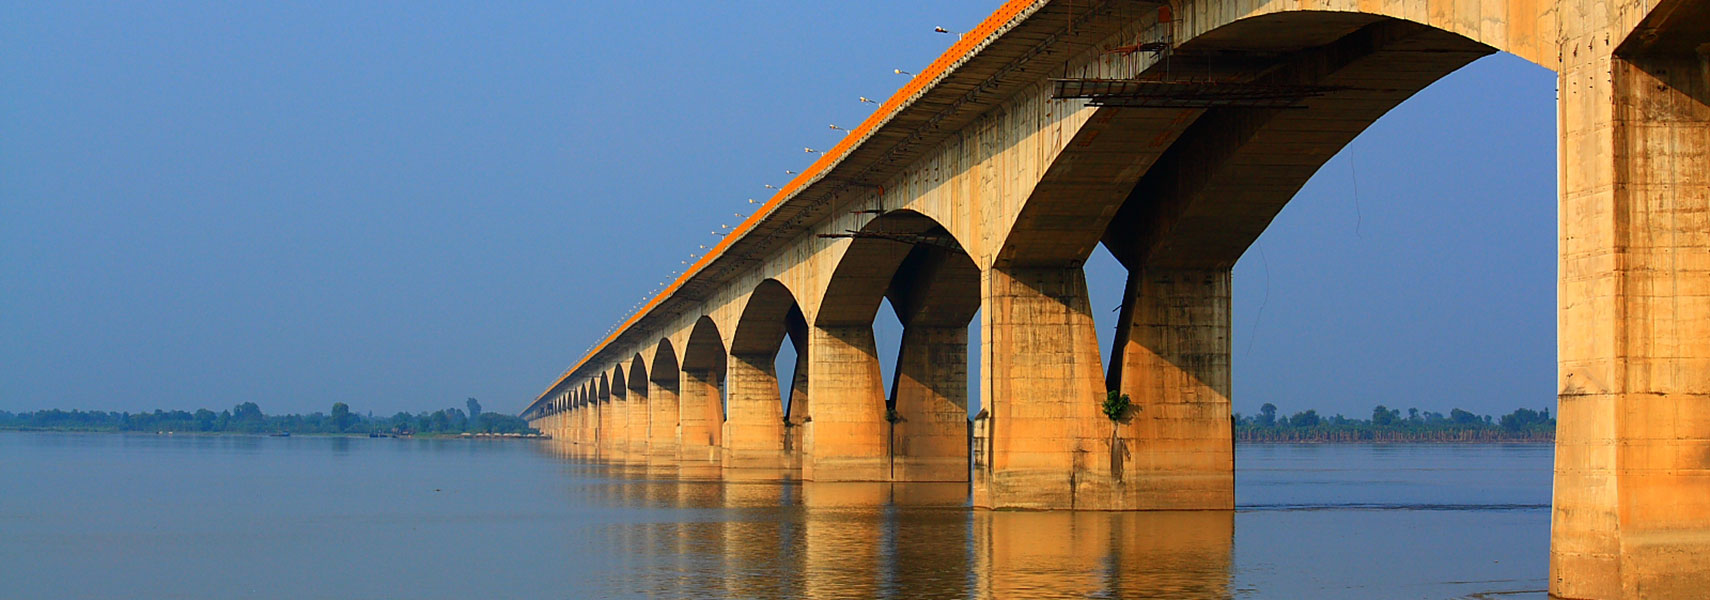 Gandhi Setu Bridge over Ganga river in Patna, India